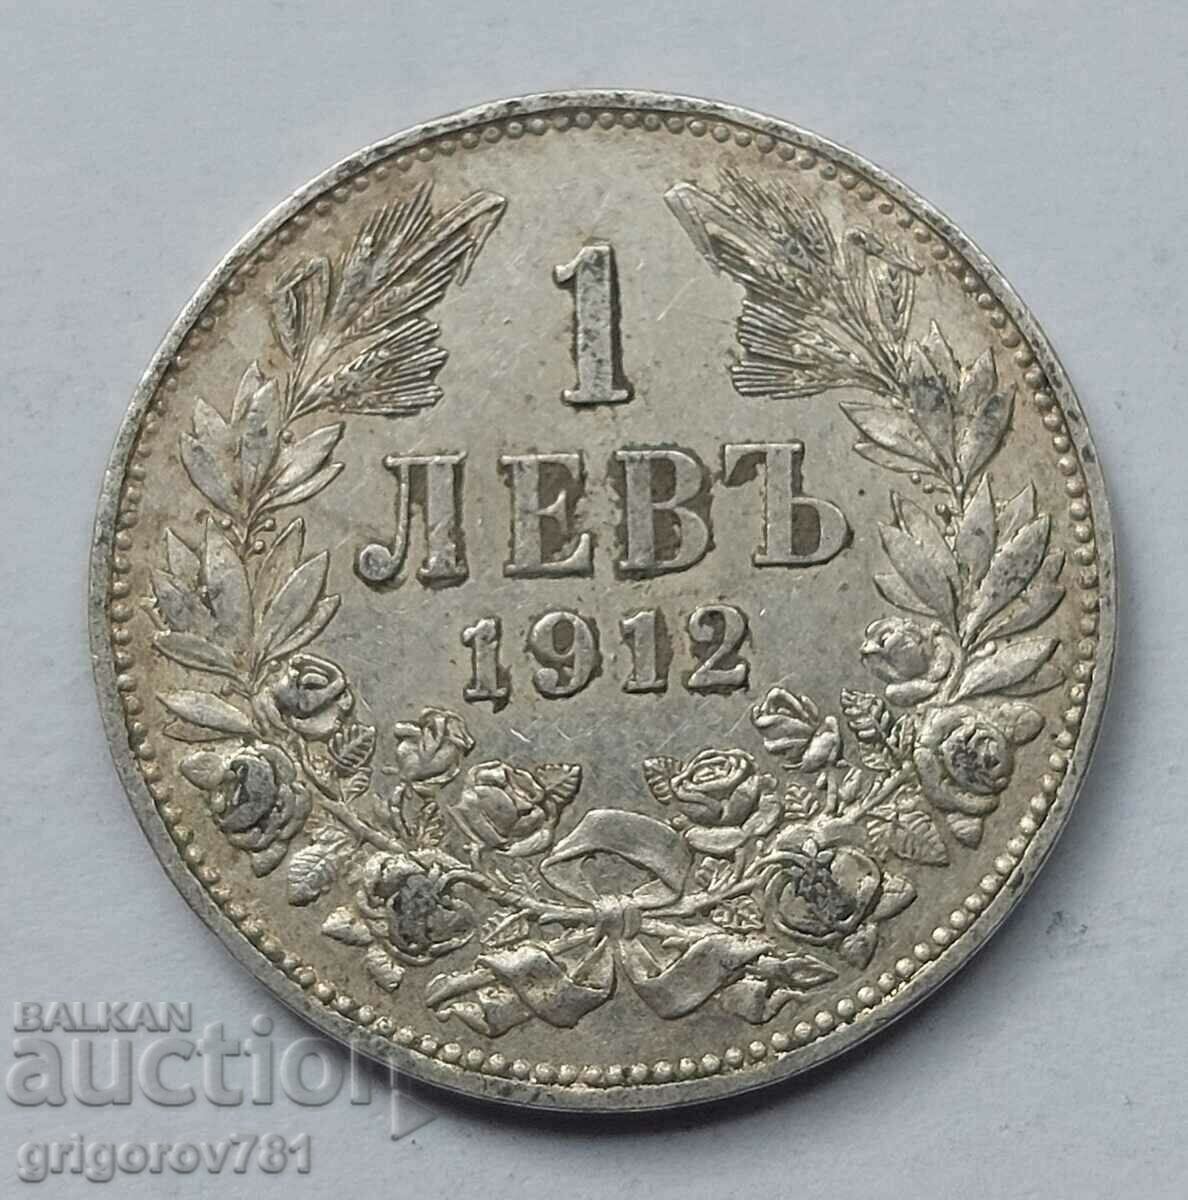 1 lev silver 1912 - silver coin #20